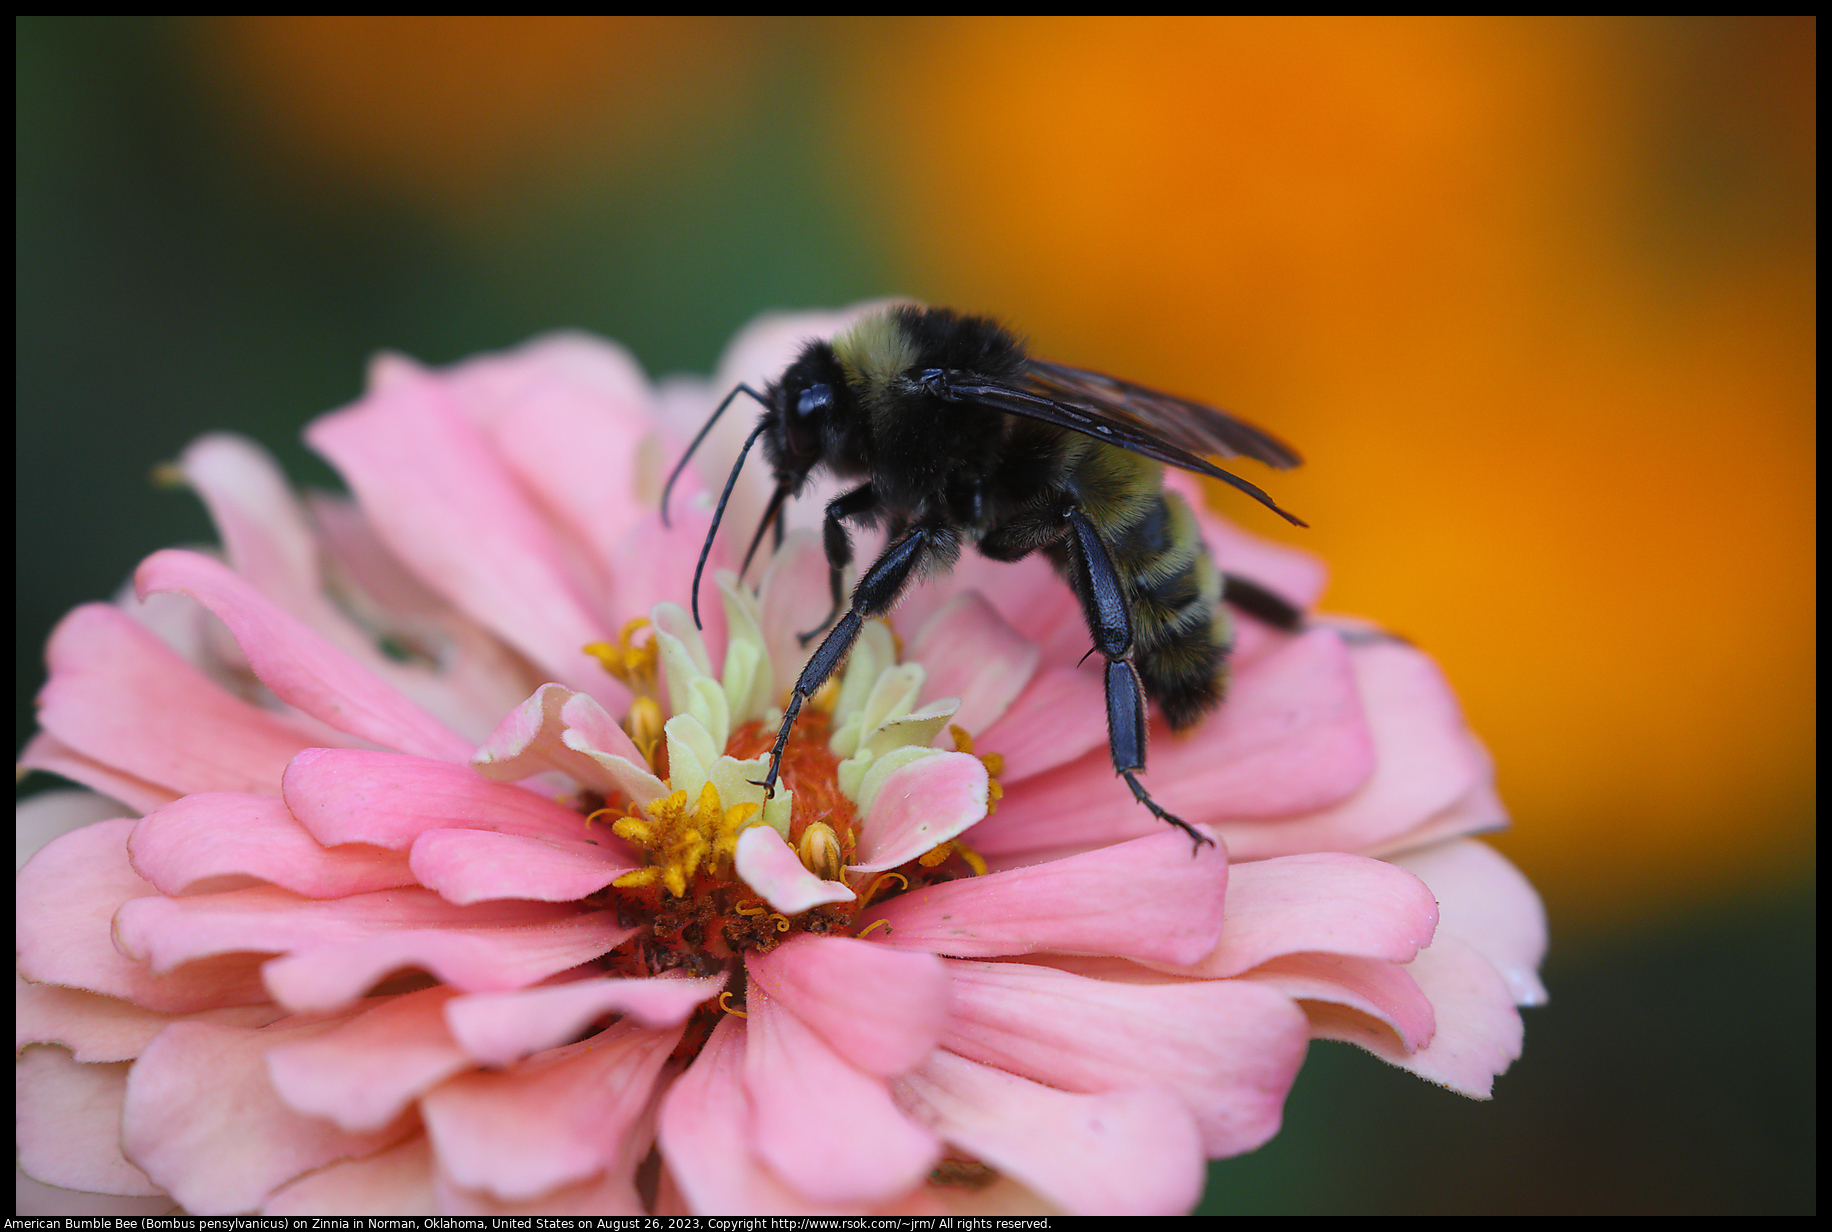 American Bumble Bee (Bombus pensylvanicus) on Zinnia in Norman, Oklahoma, United States on August 26, 2023